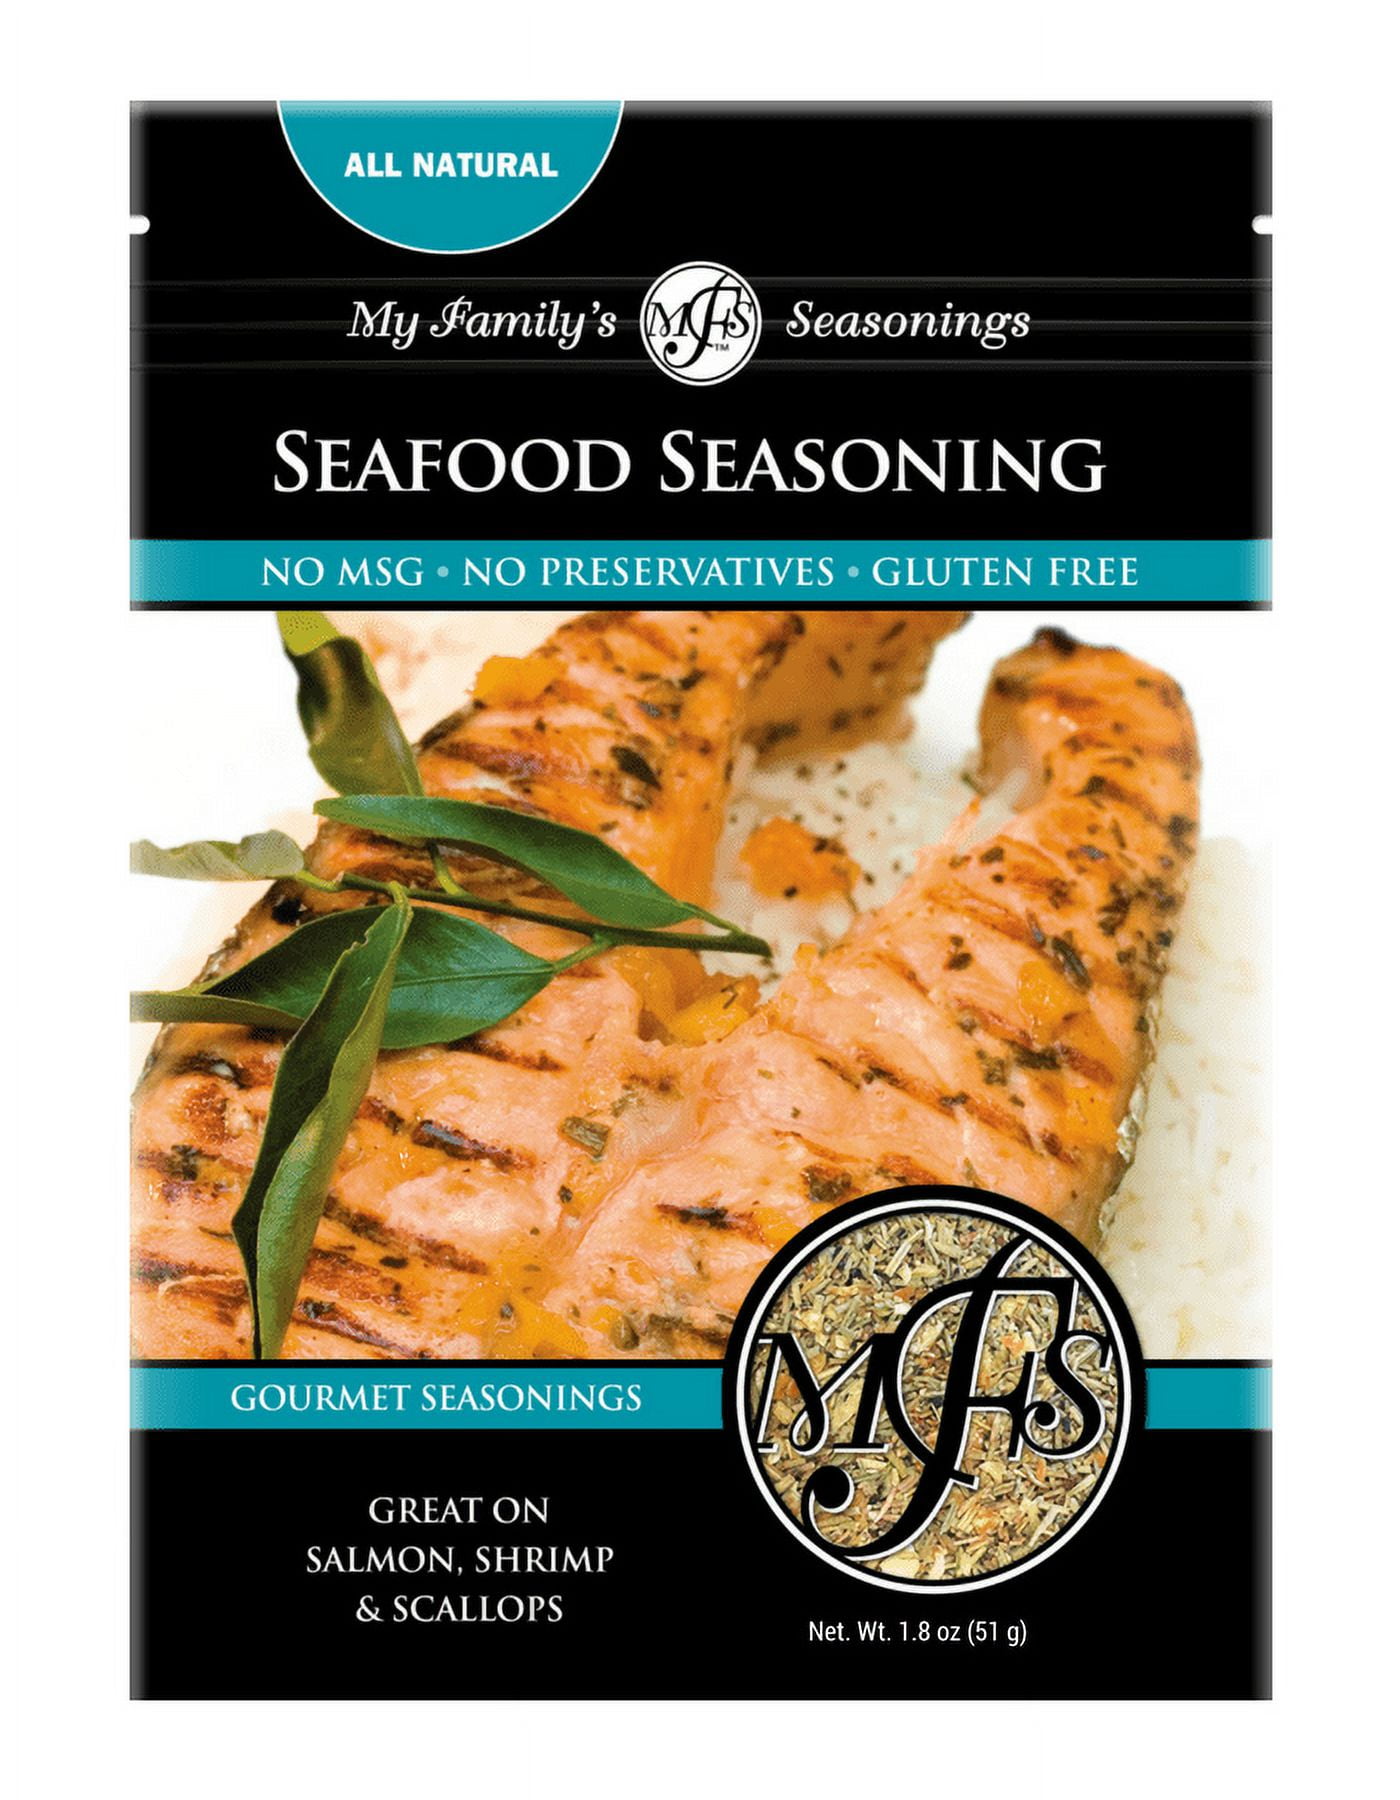 Seafood Seasoning at Whole Foods Market